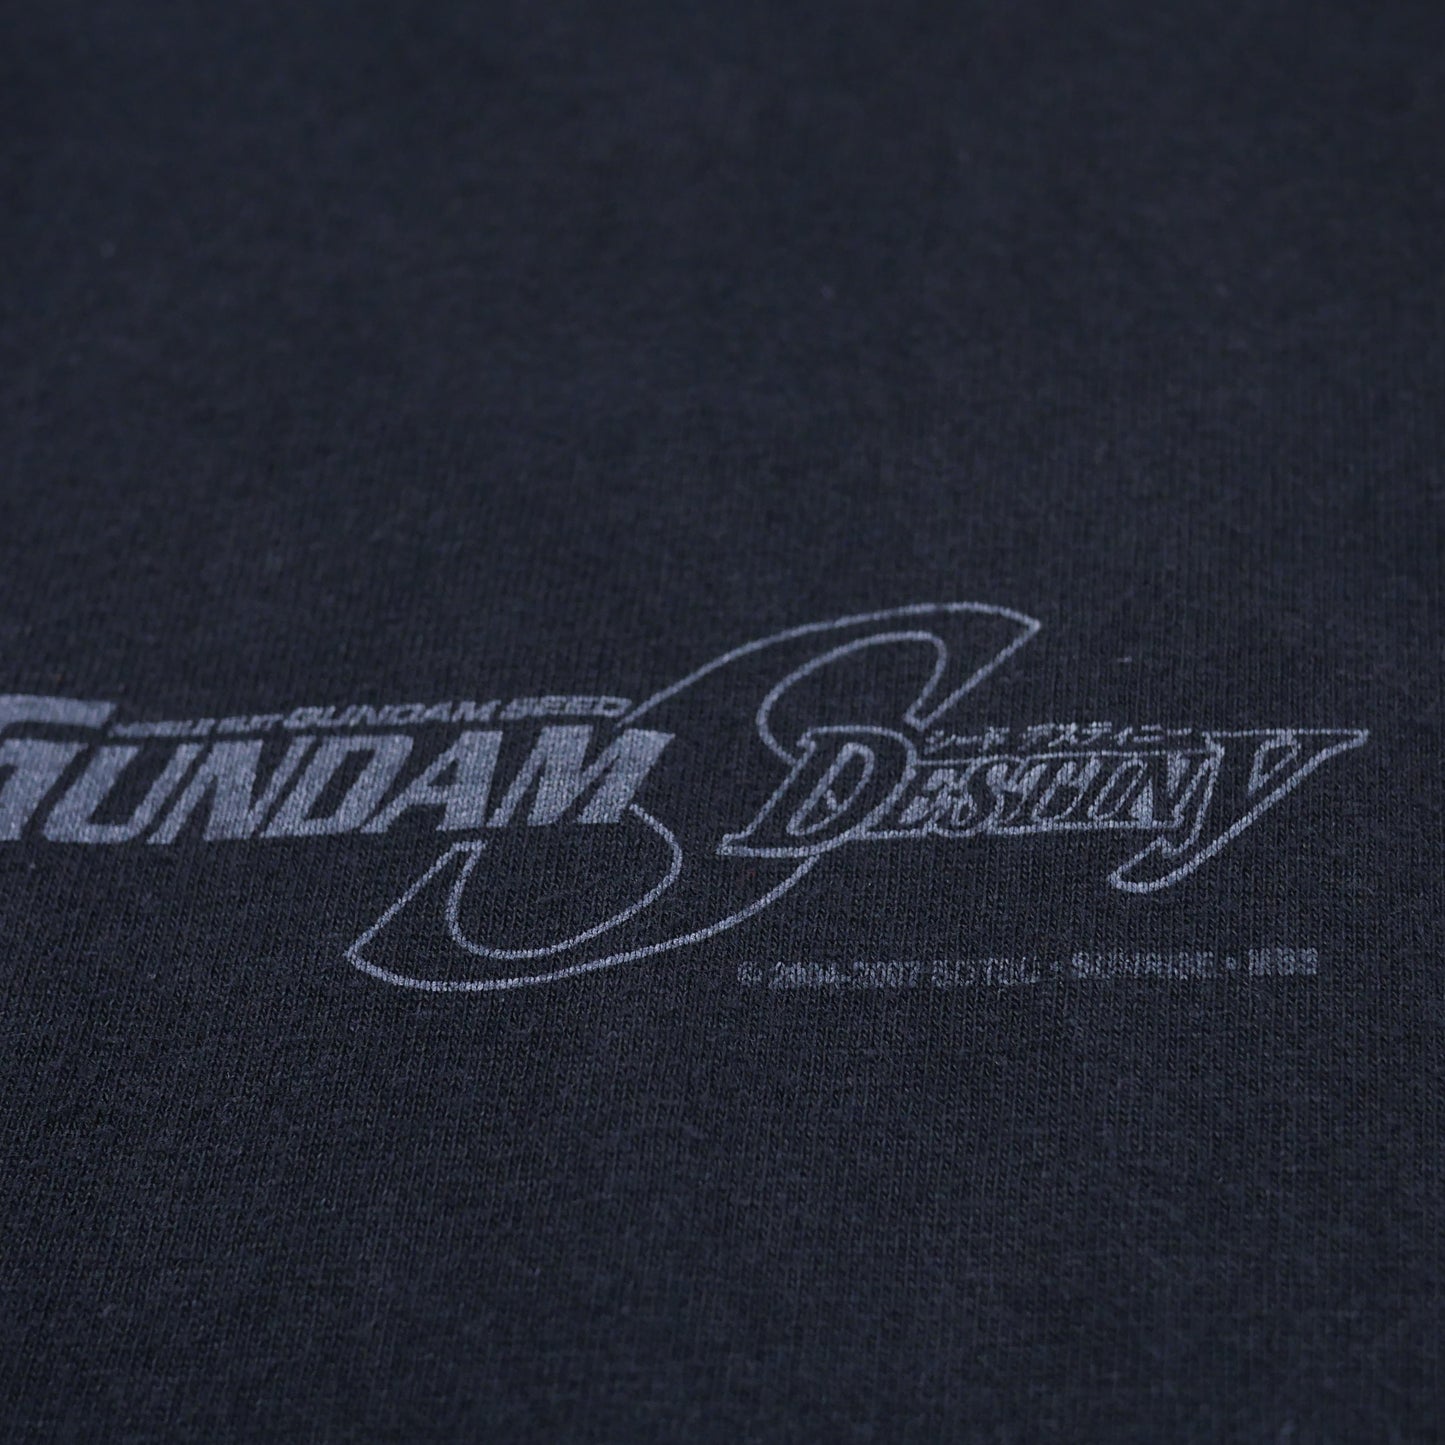 Gundam Seed Destiny Bandai Shirt - Large